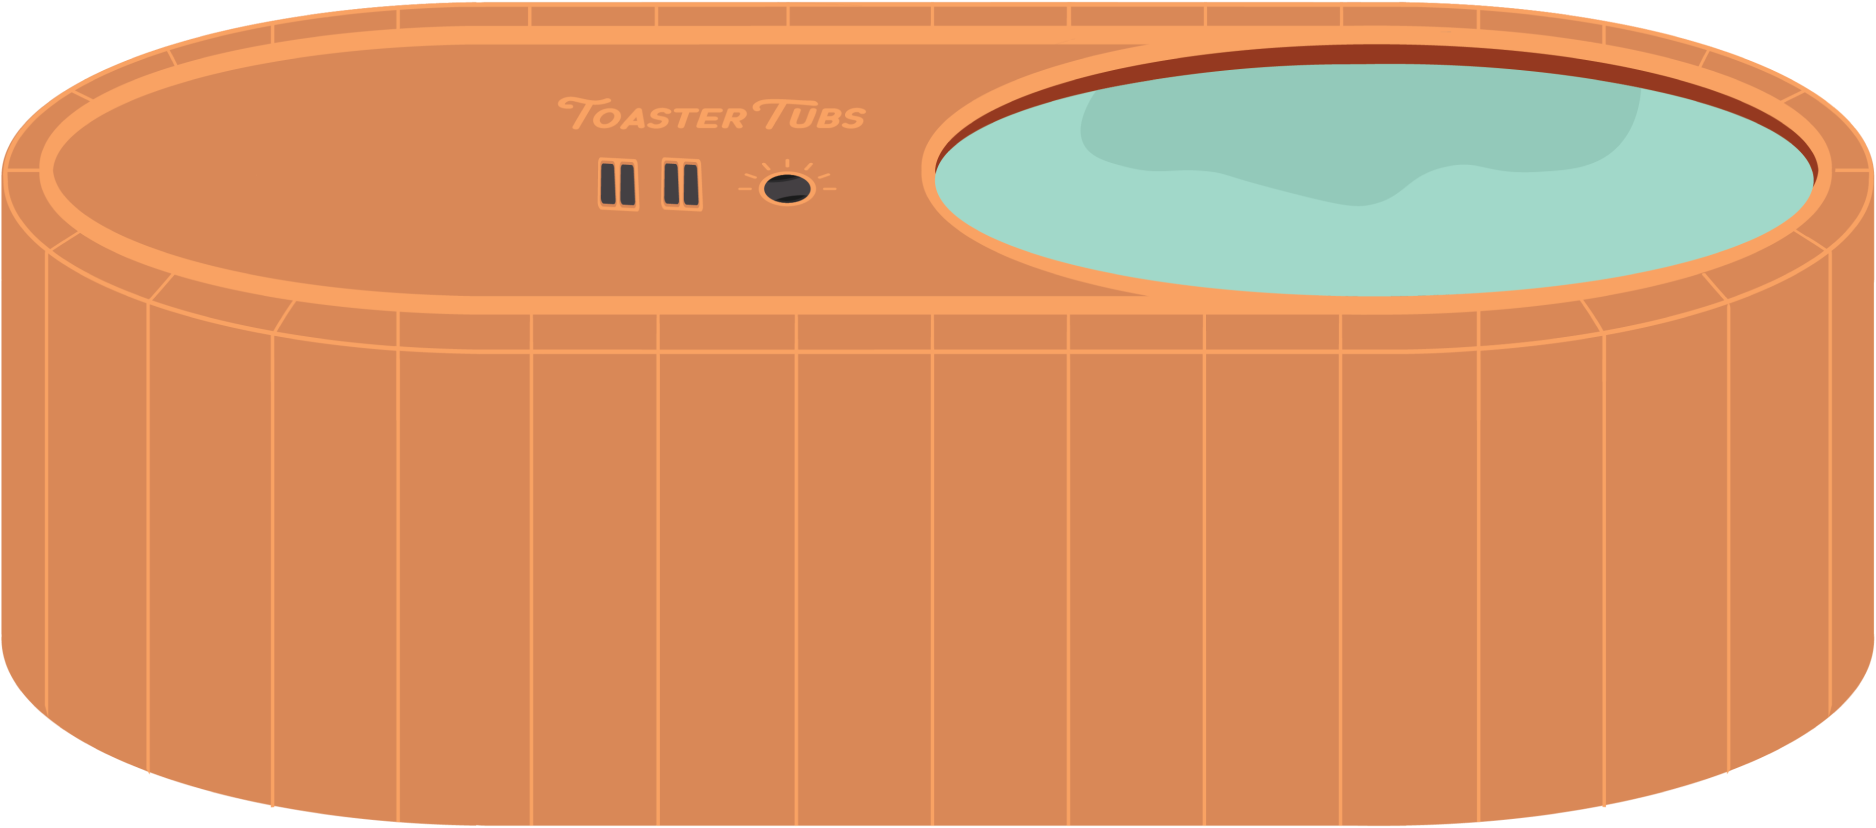 Hot tub illustration